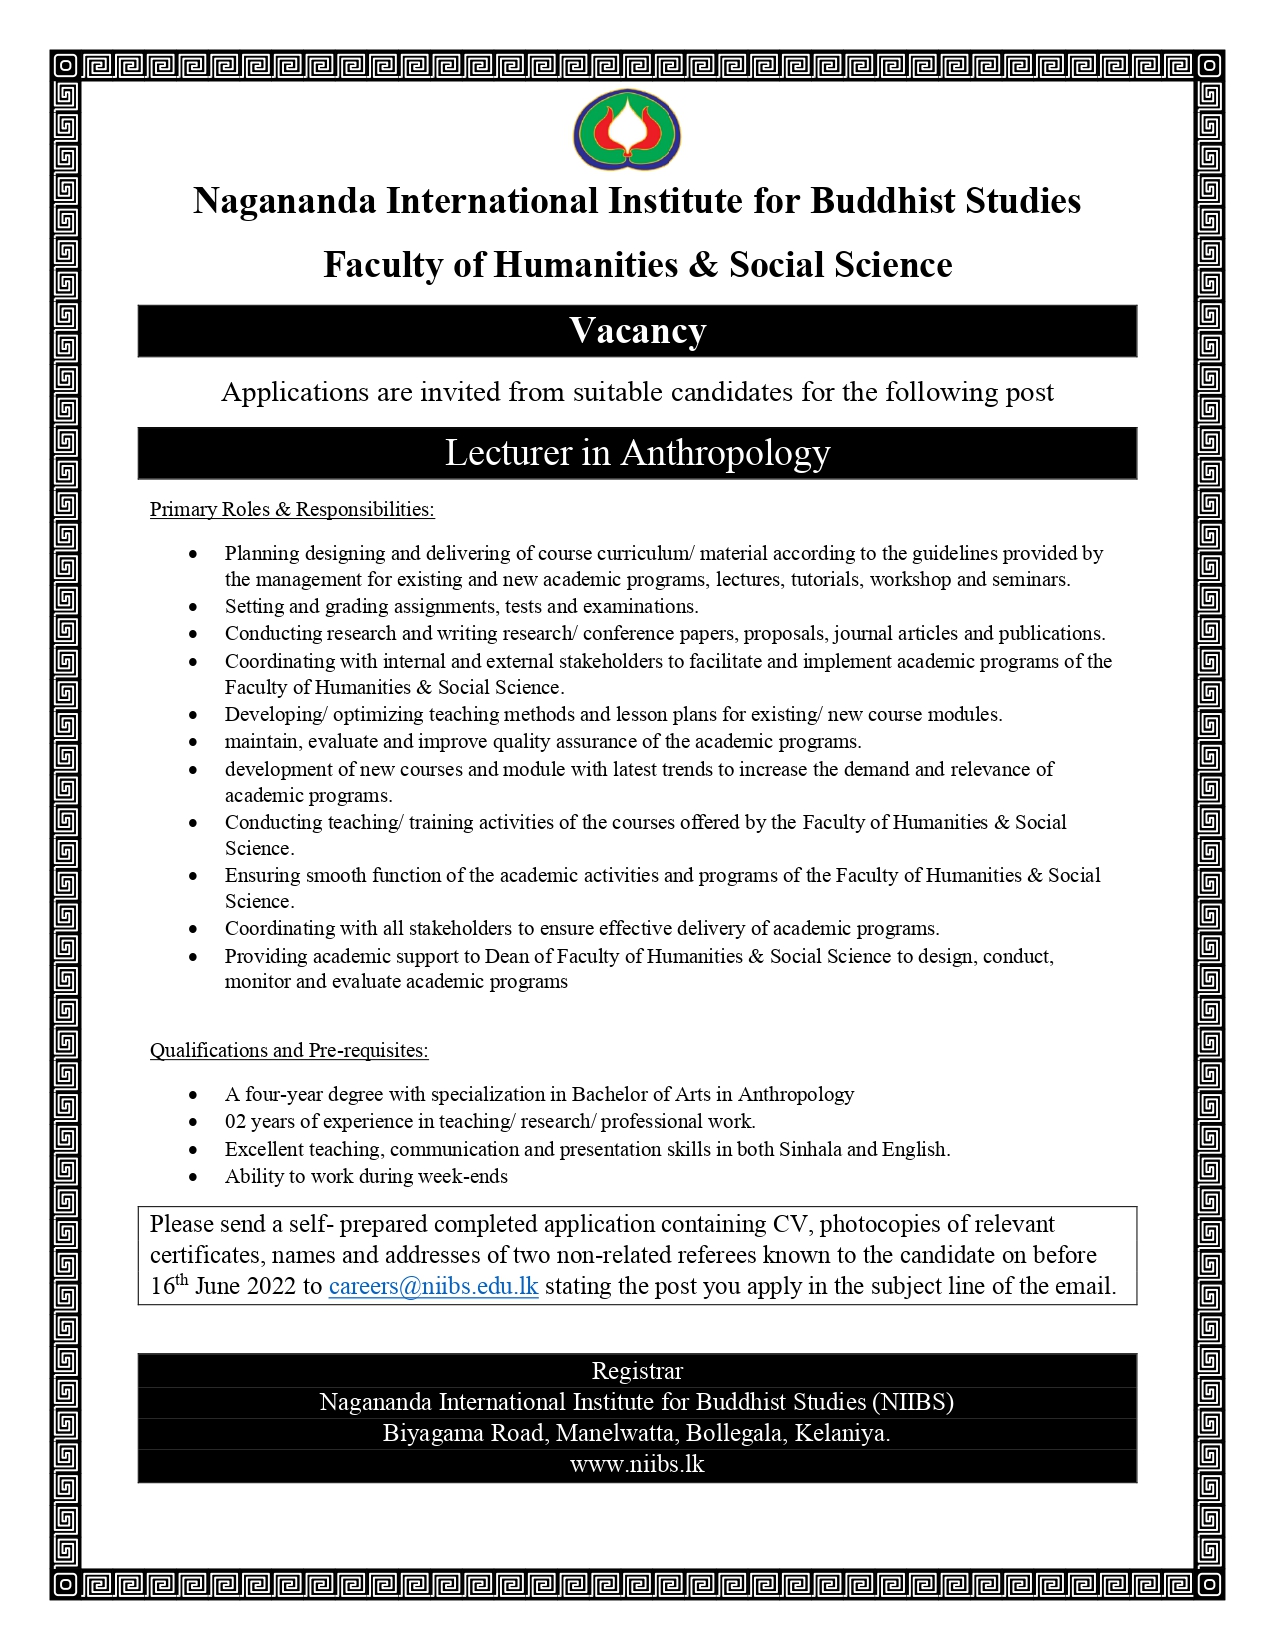 Lecturer in Anthropology - Nagananda International Institute for Buddhist Studies (NIIBS) Jobs Vacancies